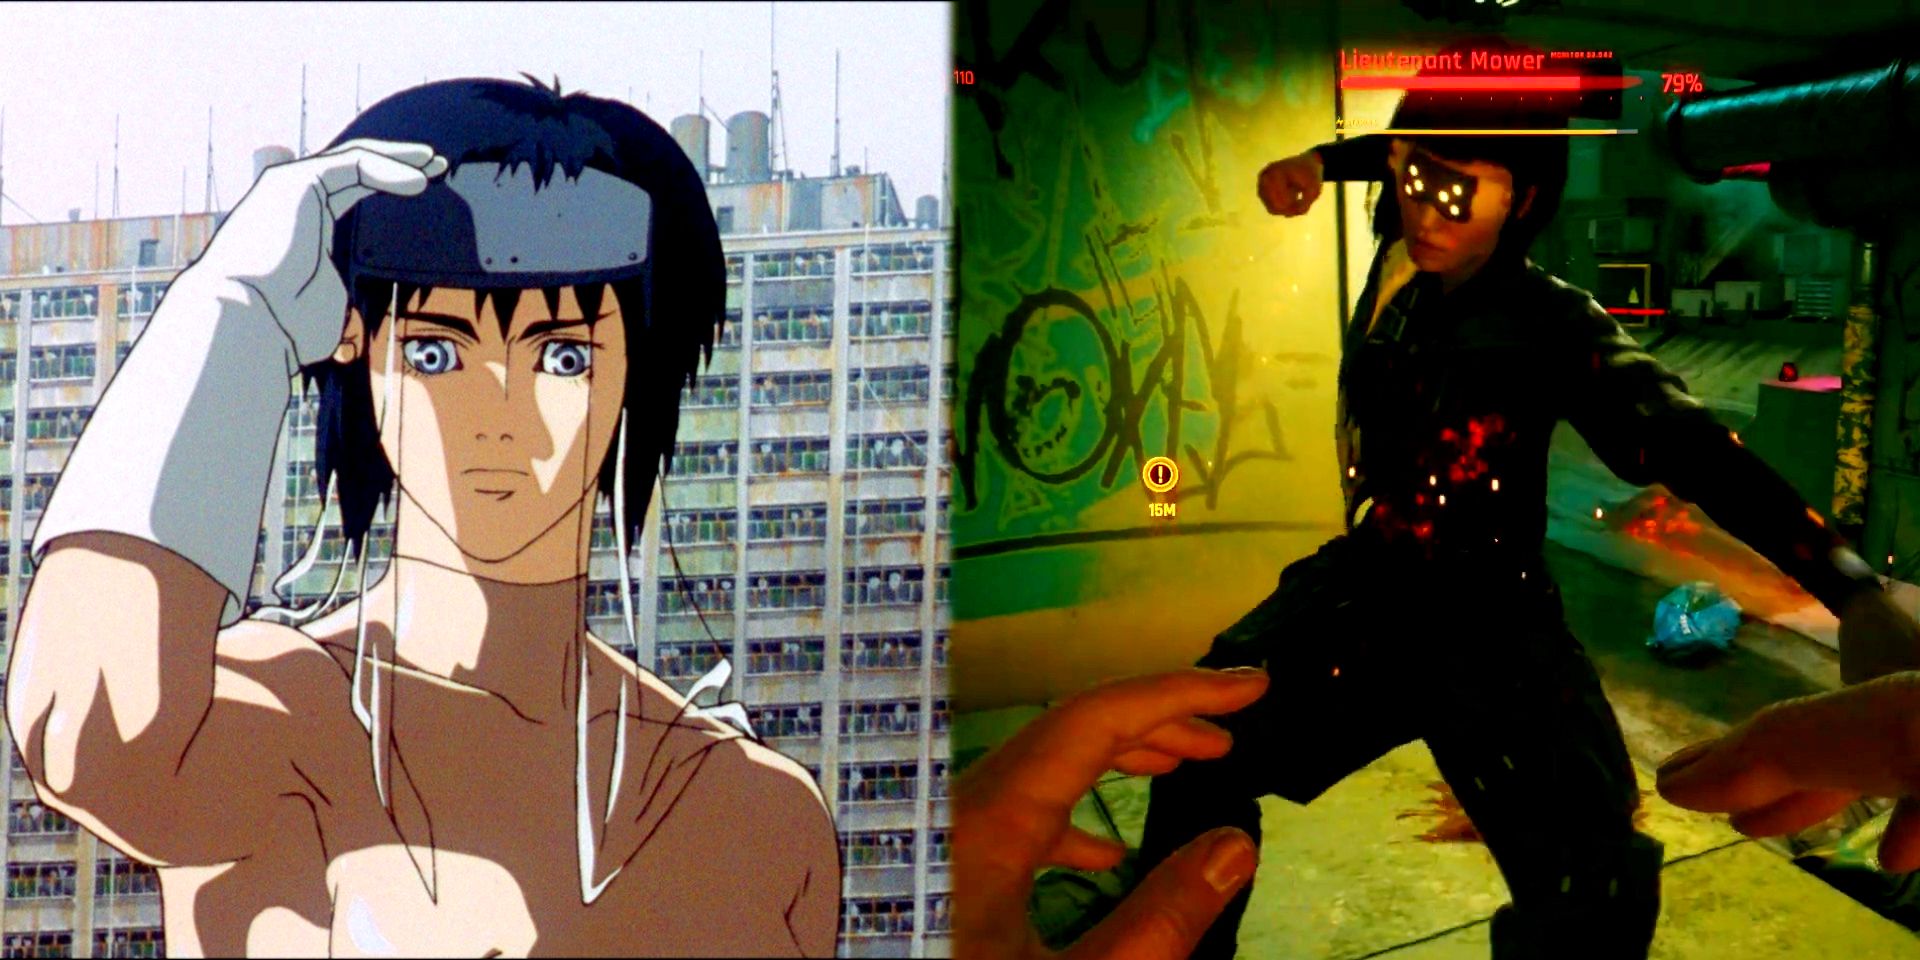 Kusanagi from GitS film and Lt Mower from Cyberpunk2077.